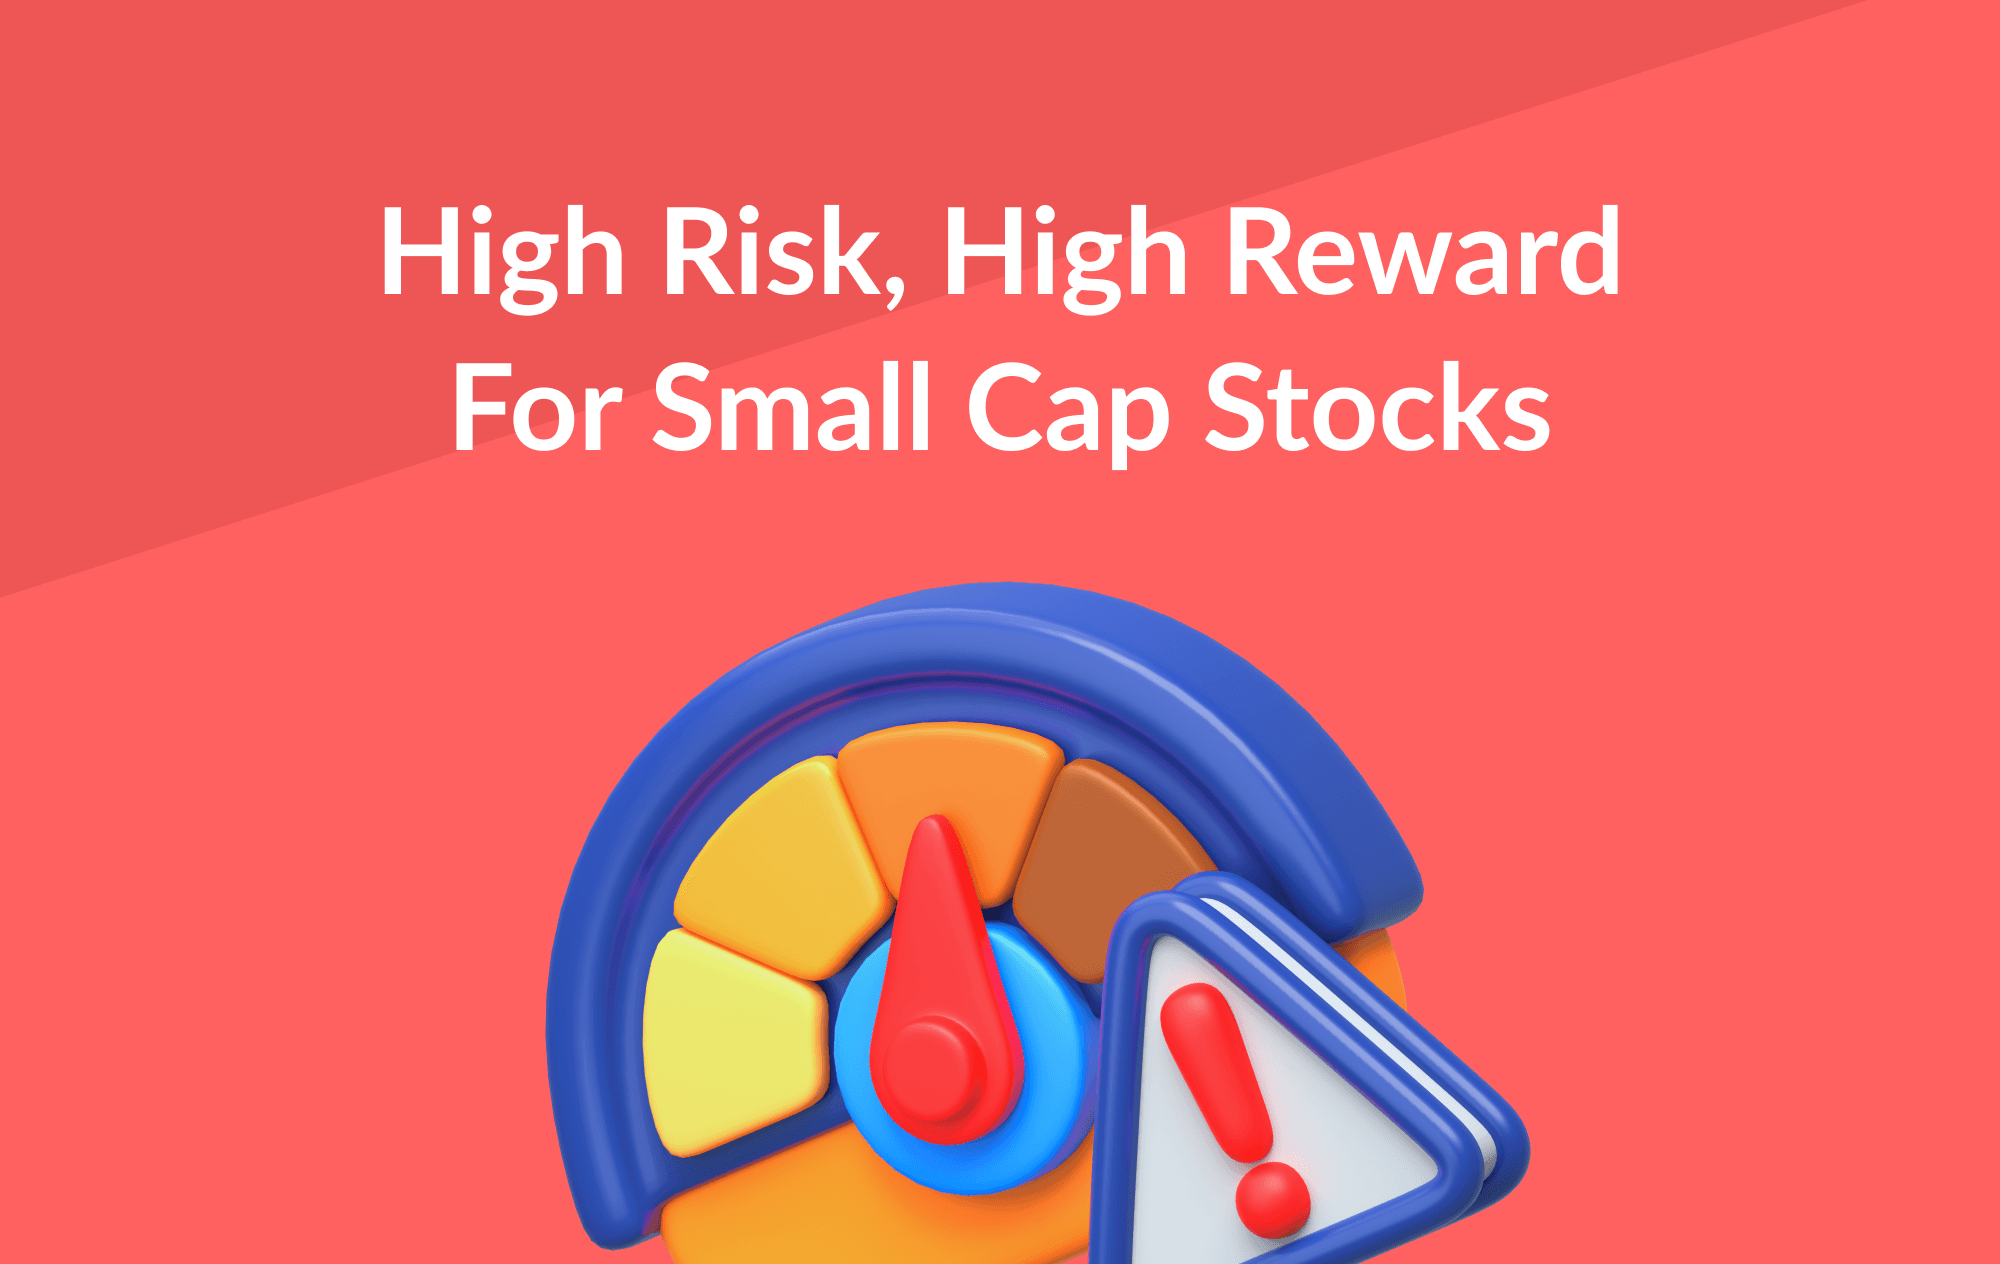 Investing in Small Cap Stocks: High Risk, High Reward